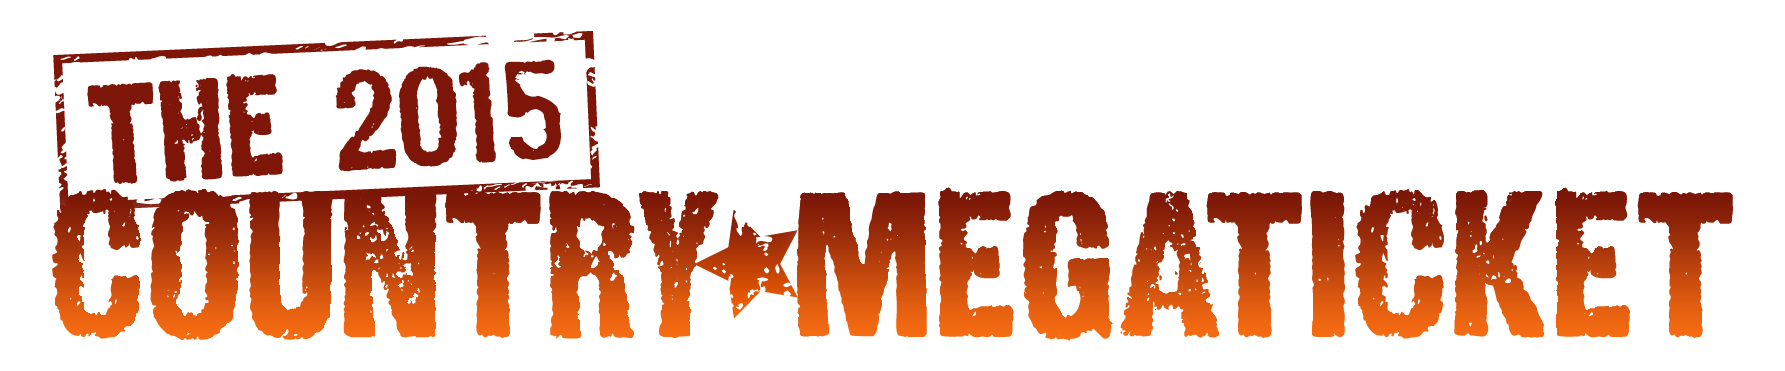 2015 Country Megaticket Tickets (Includes All Performances: Brad Paisley, Lady Antebellum, Dierks Bentley, Florida Georgia Line, Tim McGraw, Luke Bryan)